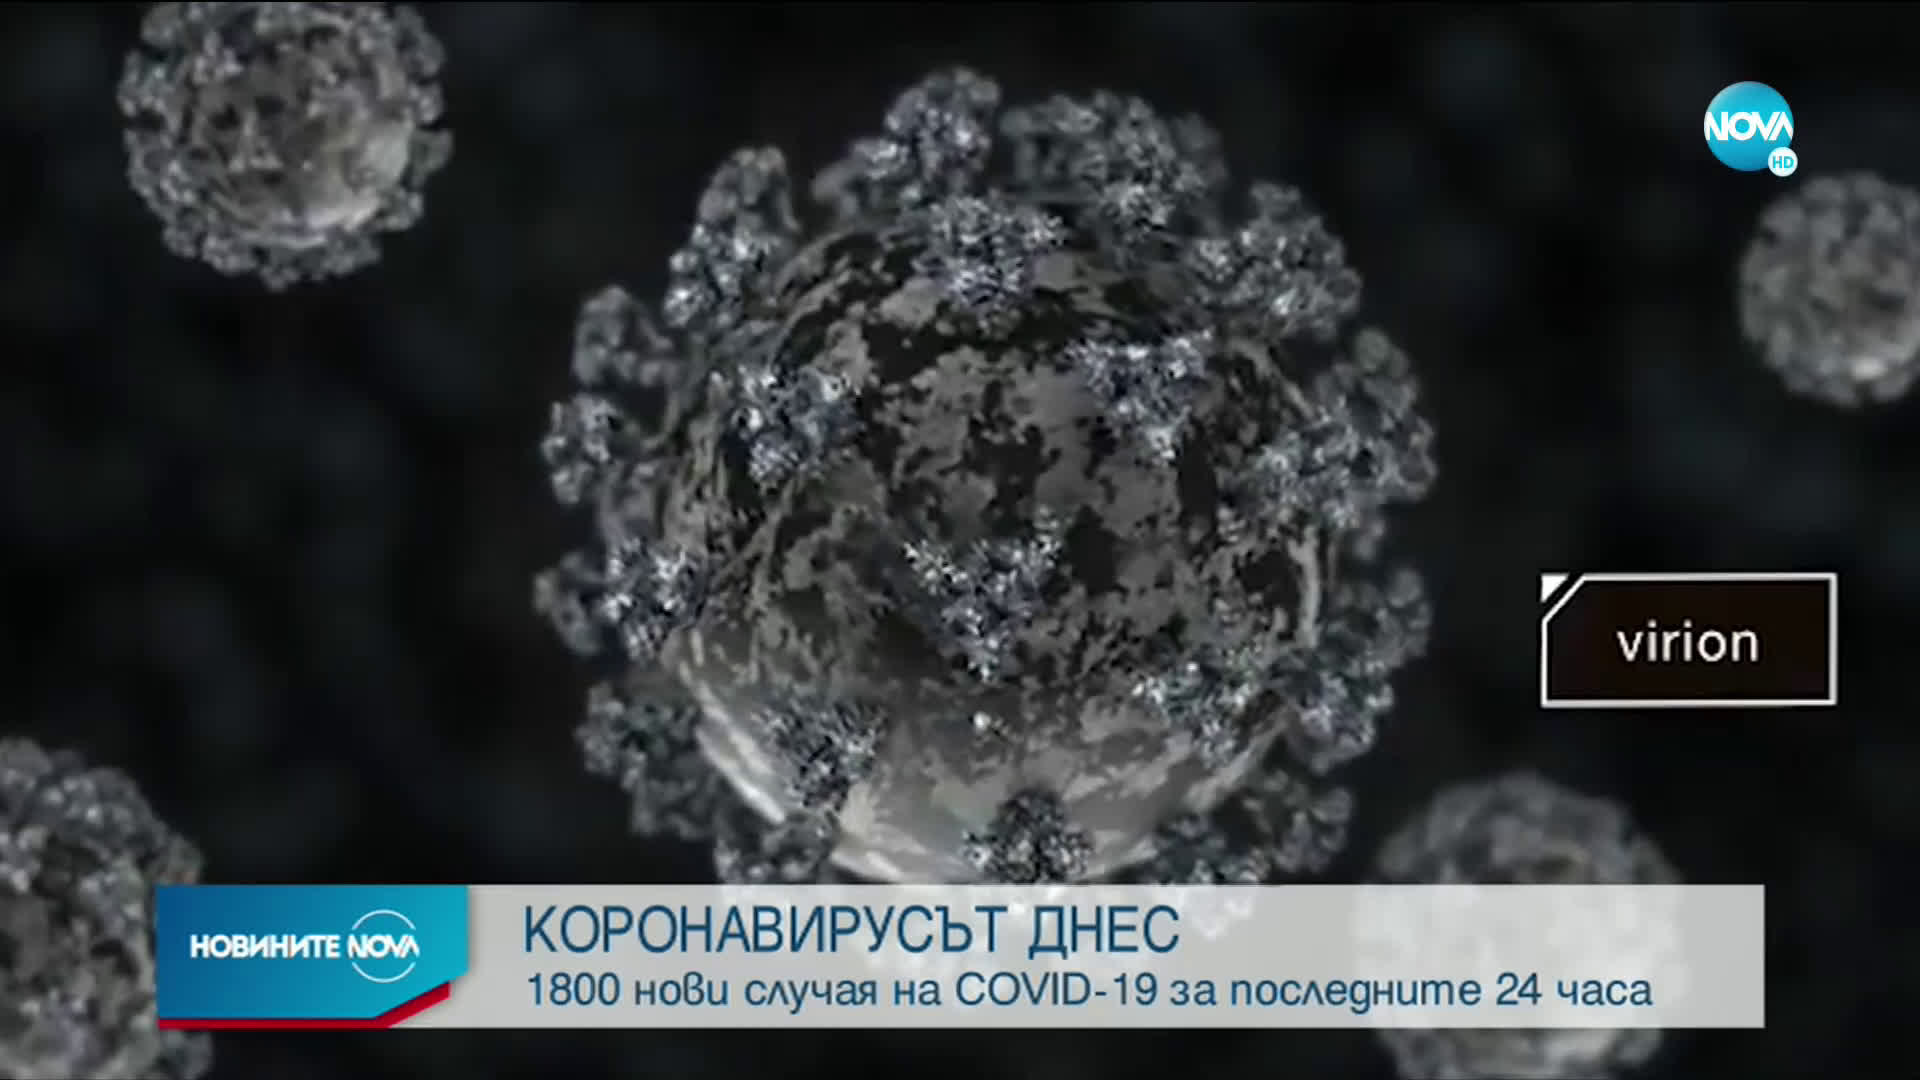 1 800 нови случая на коронавирус у нас